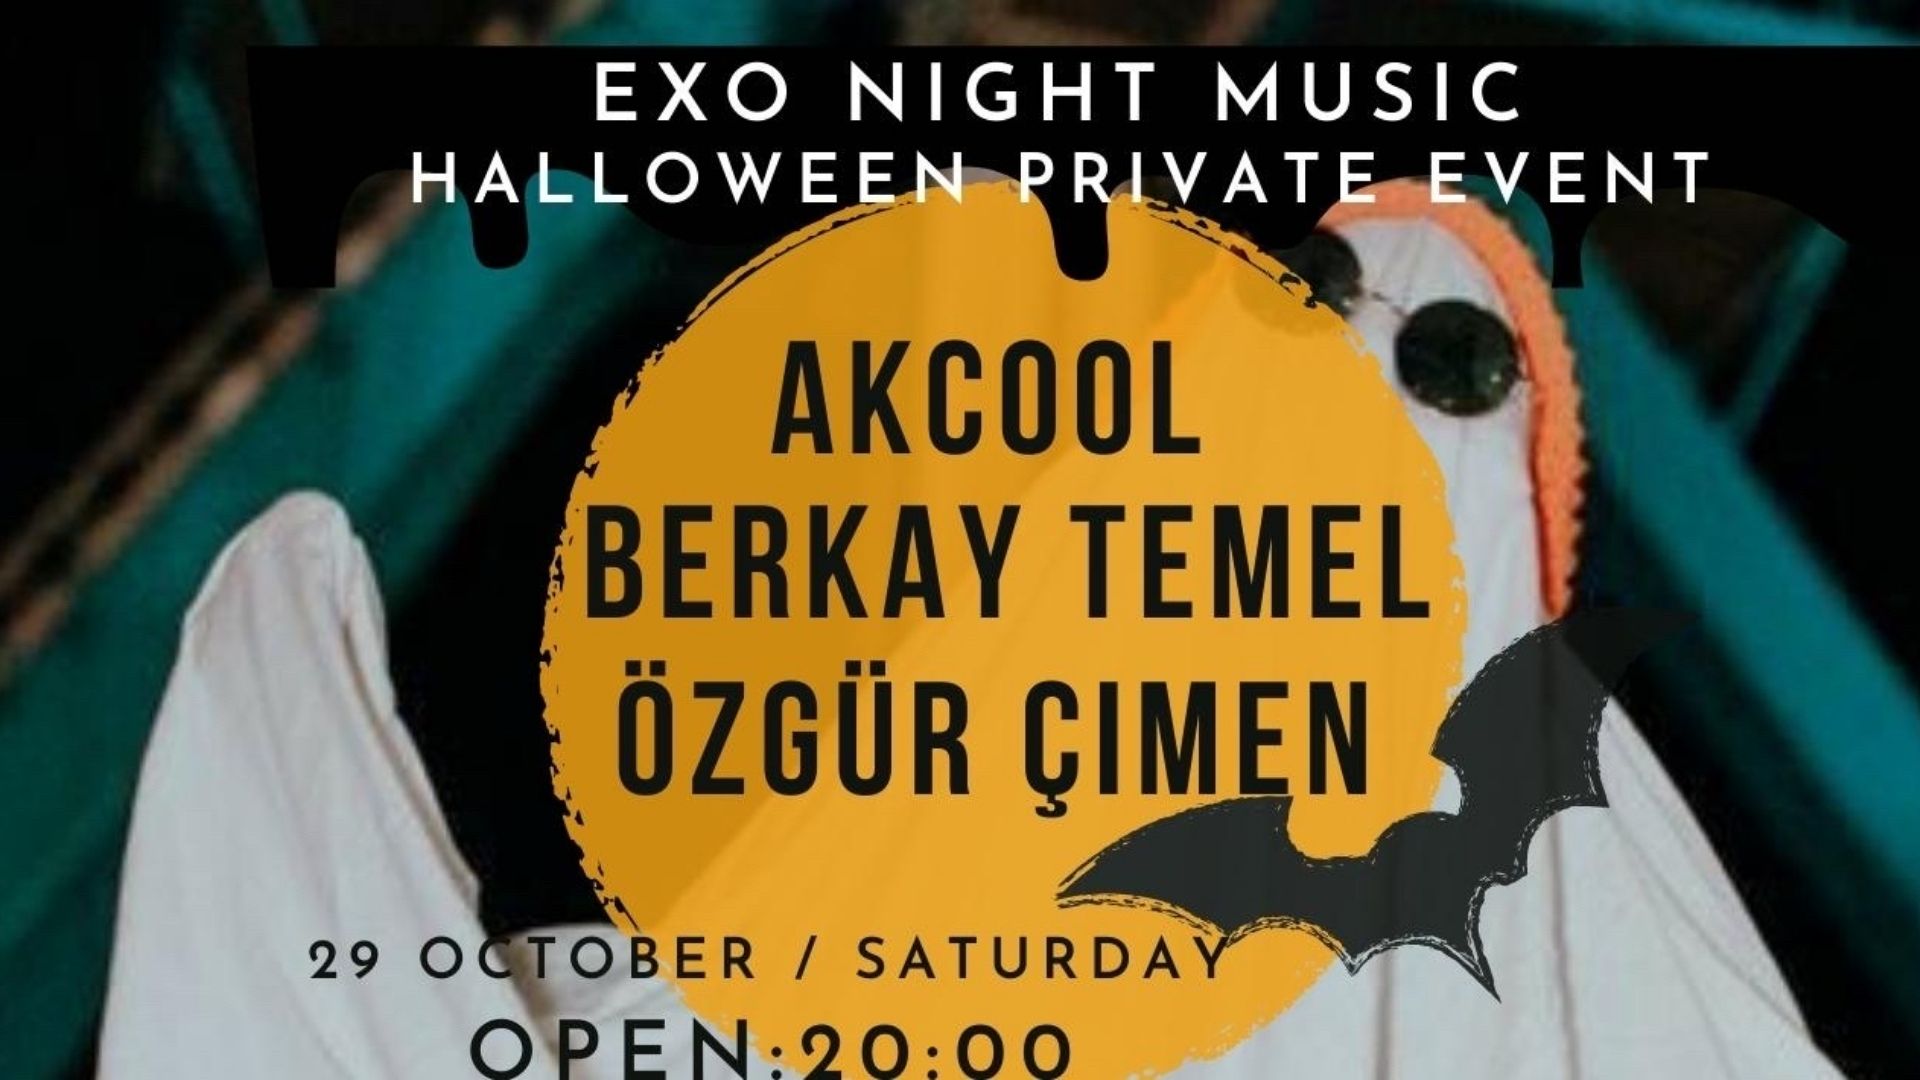 Exonight Halloween Private Event